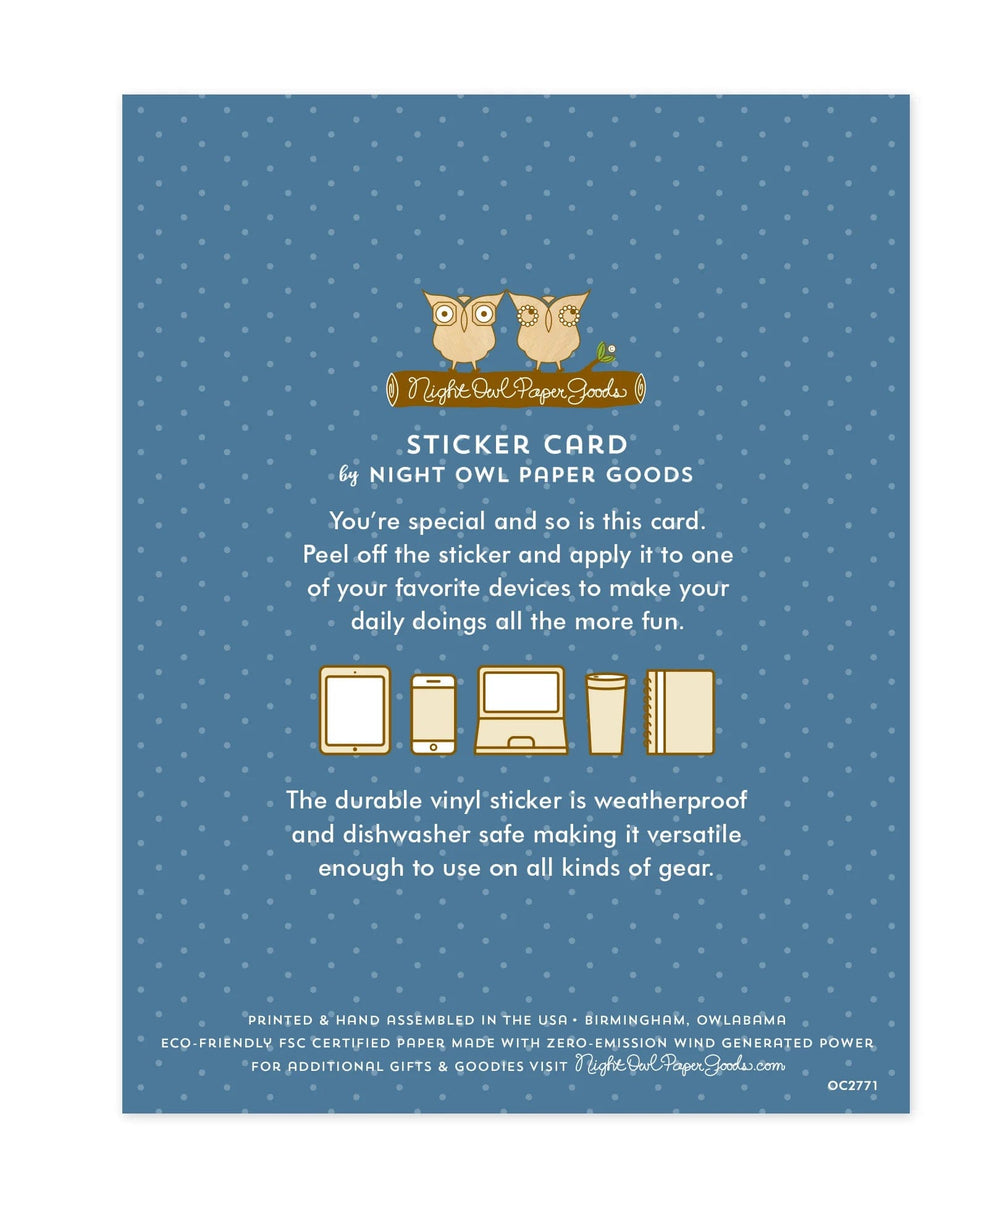 Night Owl Paper Goods Card Shining Star Admin Sticker Admin Professionals Day Card